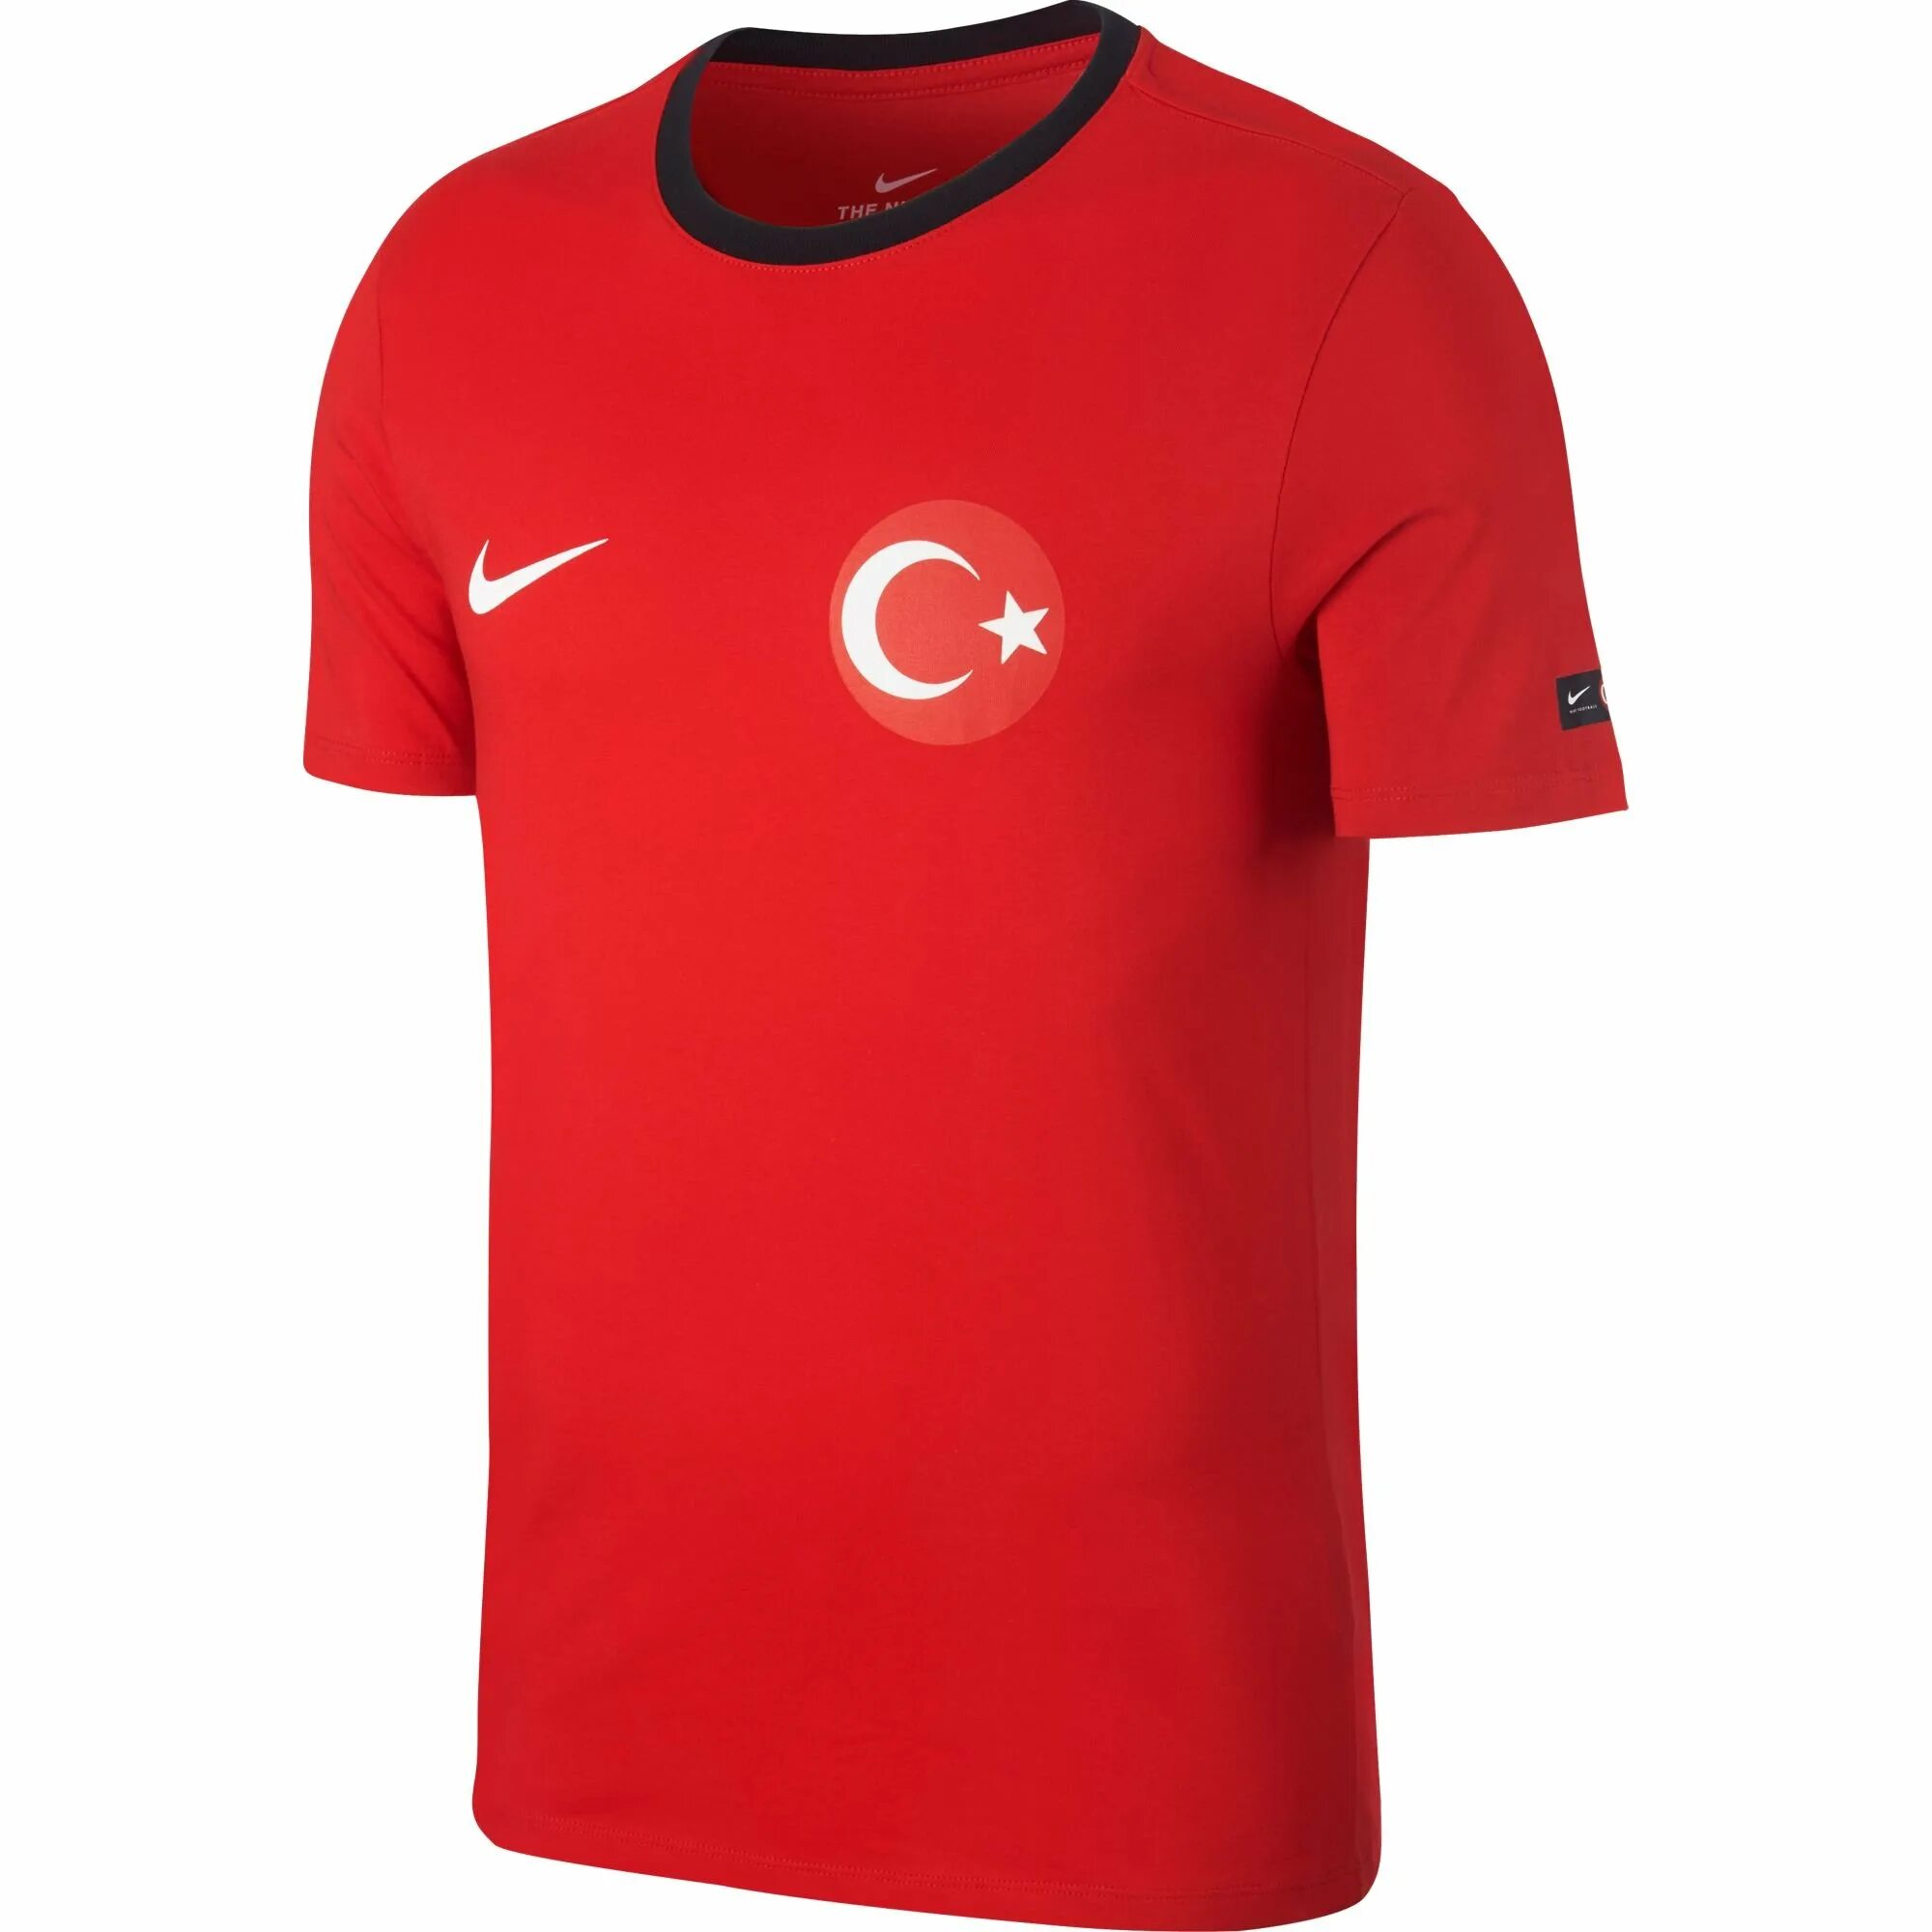 Nike Turkey Dri Fit футболка. Nike Dri Fit Turkey. Турецкие футболки. Футболка Turkey мужская. Найк турция сайт